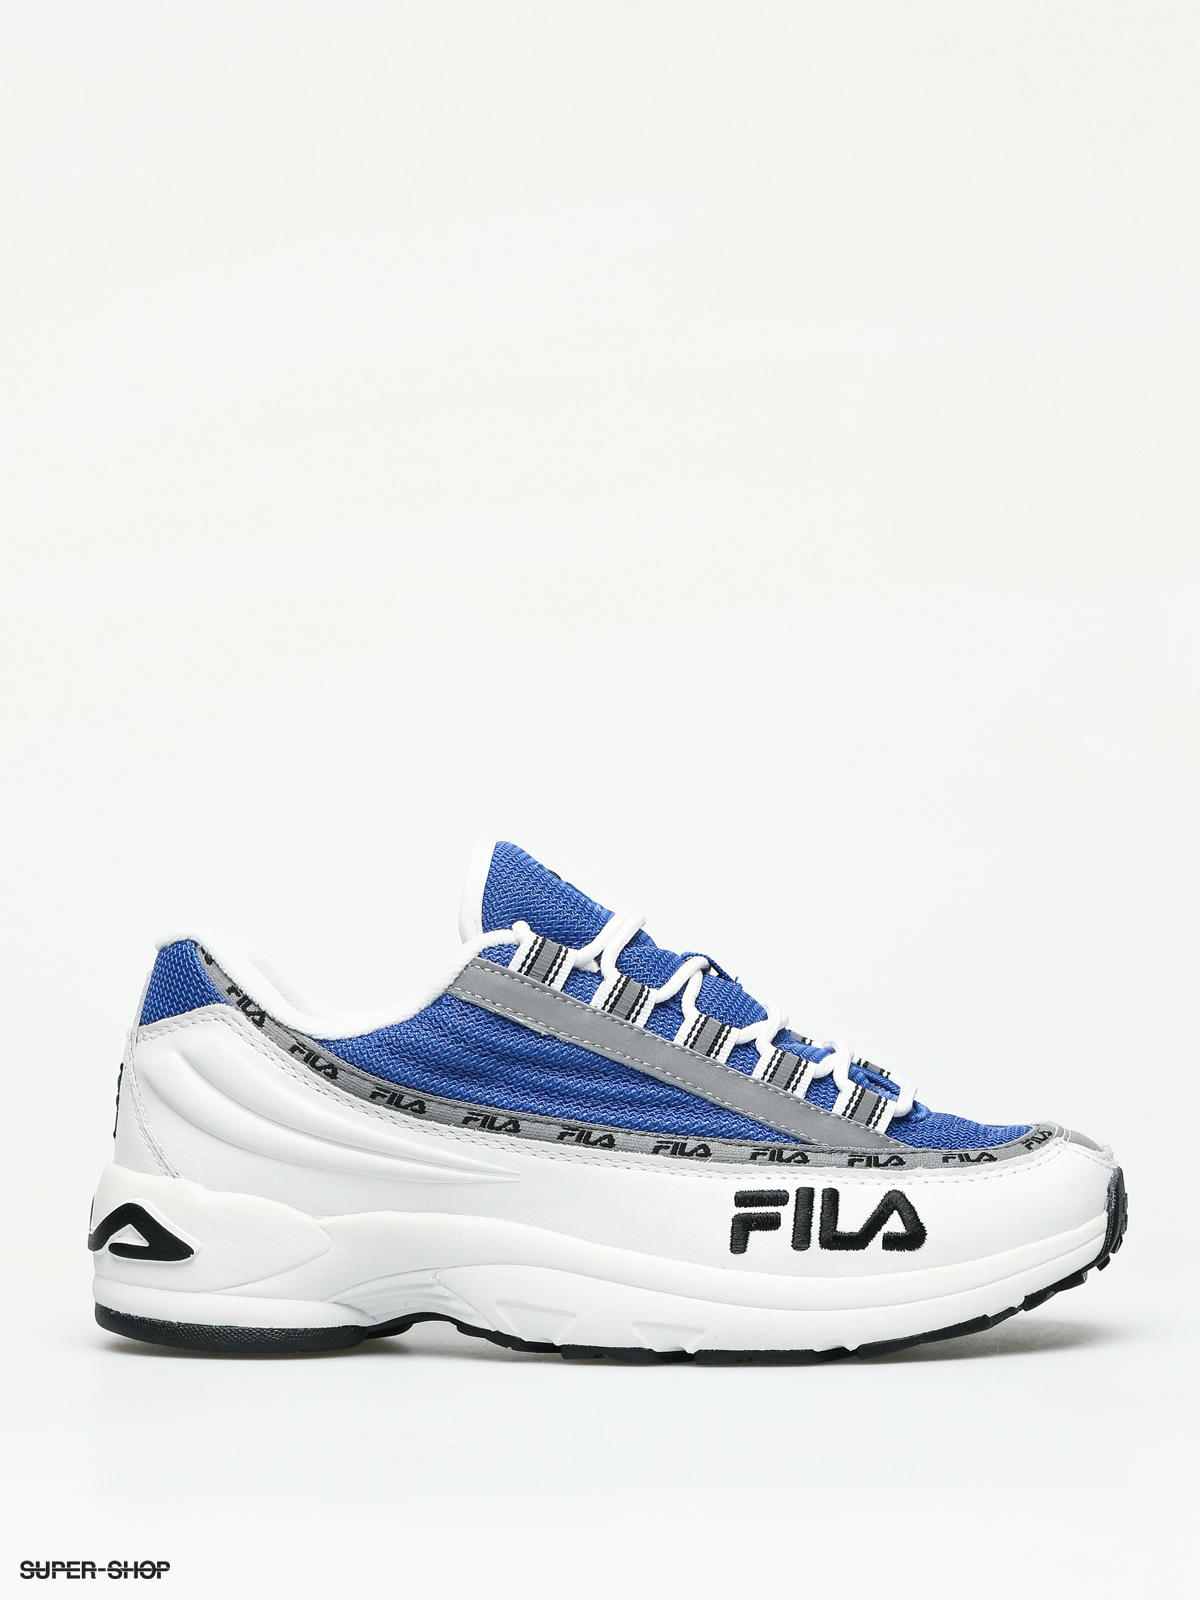 beu Glad Antecedent Fila Dragster 97 Shoes Wmn (white/electric blue)